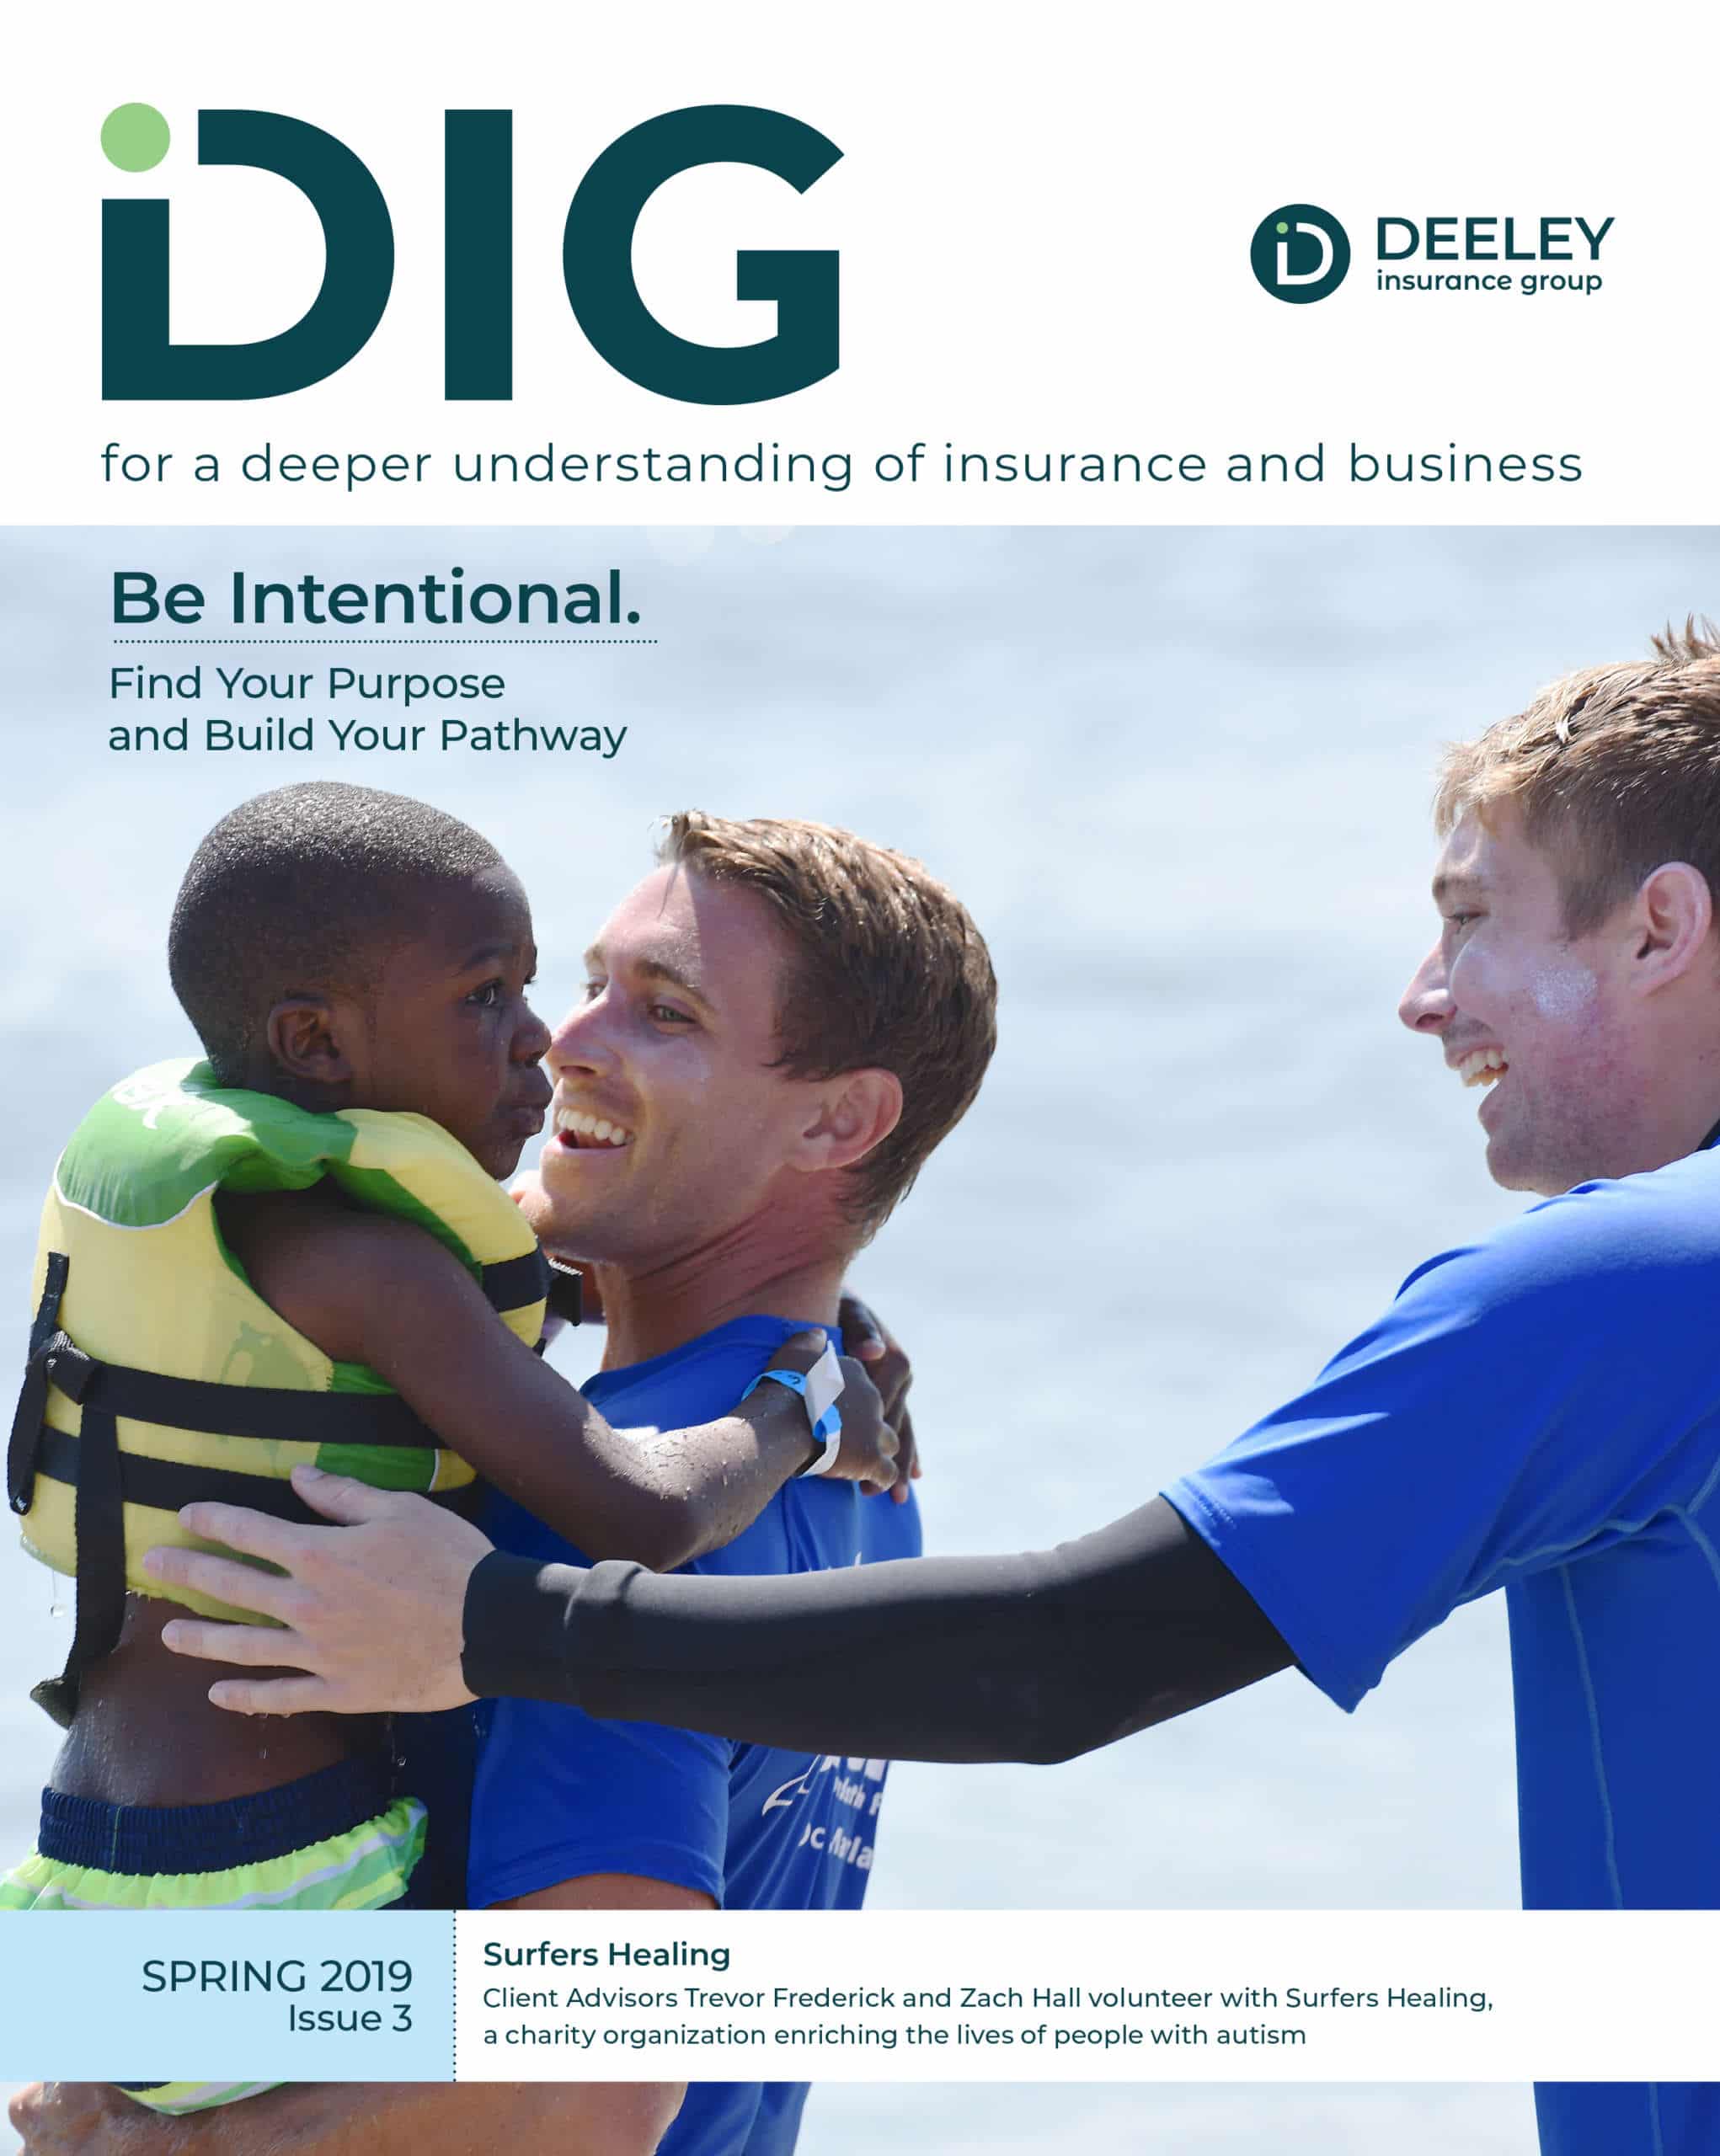 Deeley Insurance